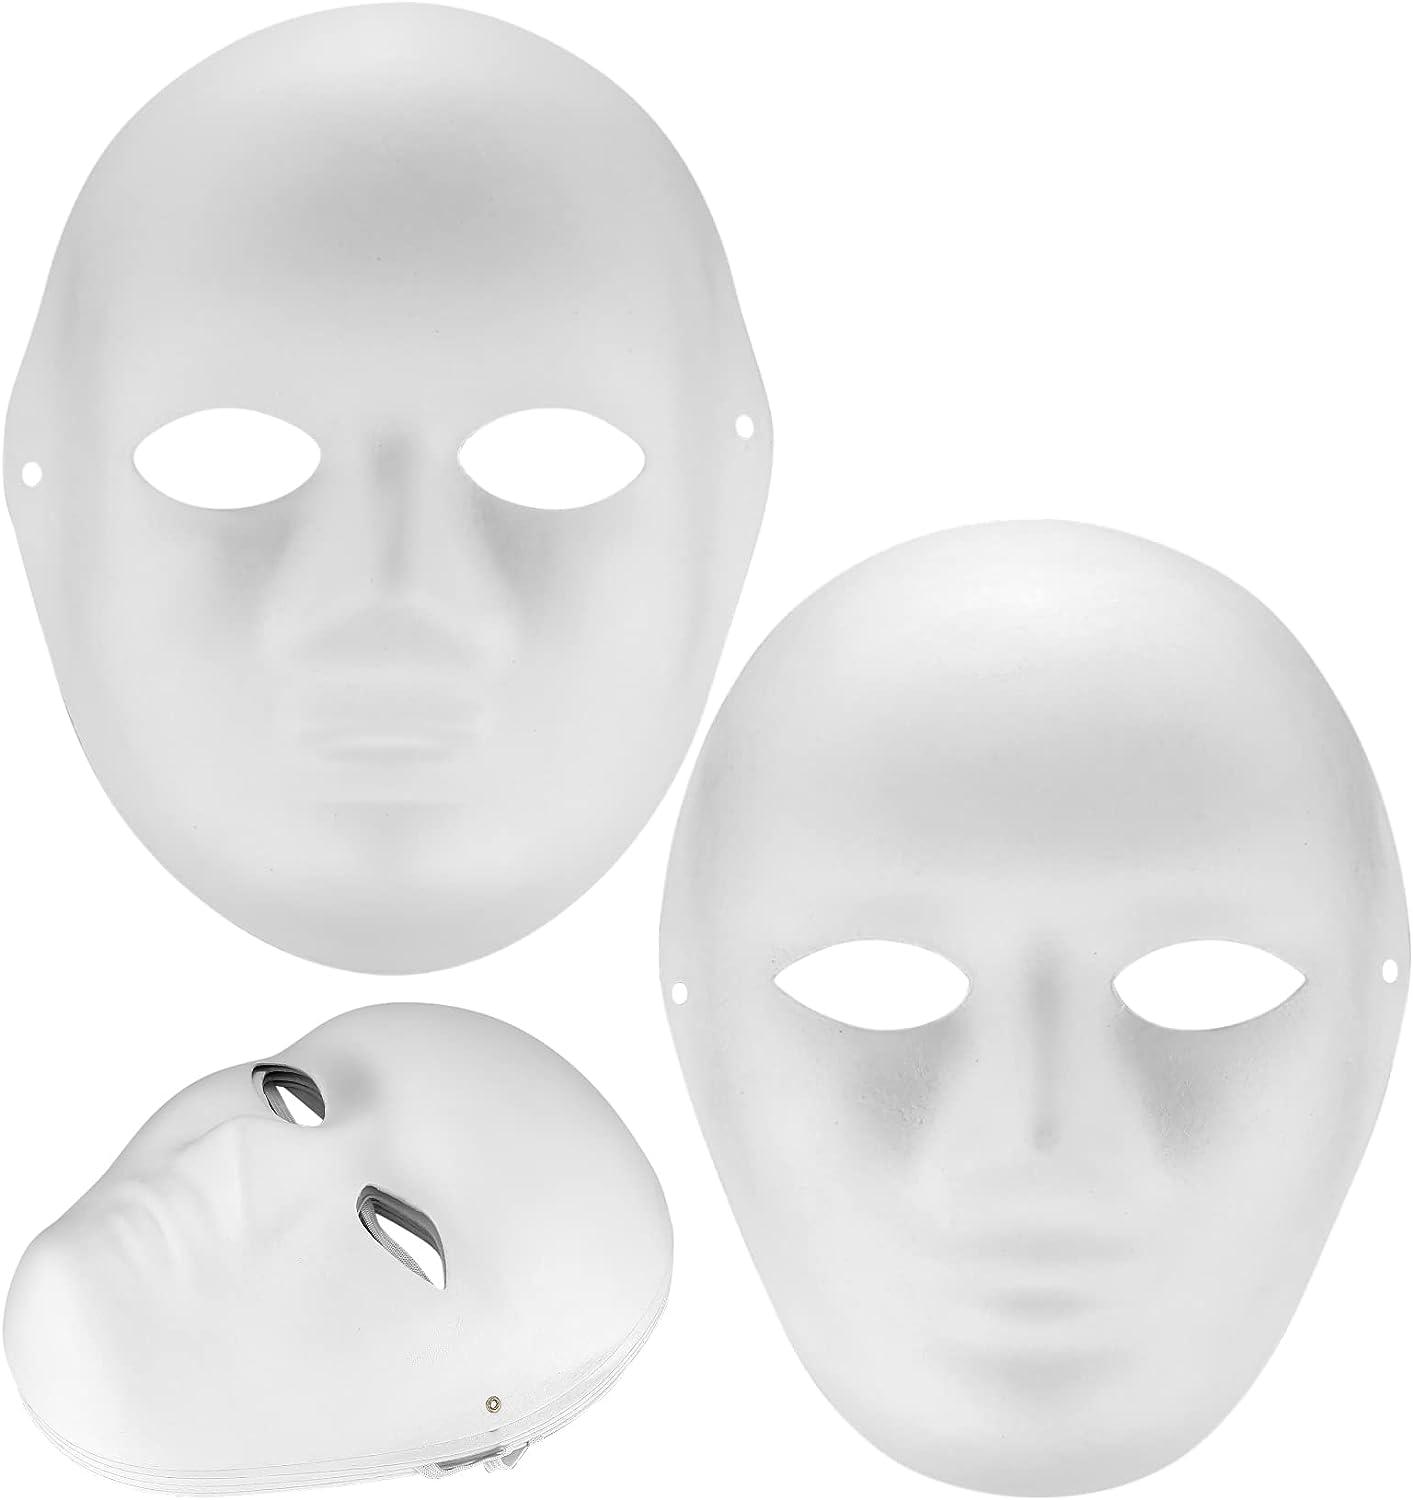 10pcs Paper Mache Art Masks Half Face White Masks DIY Blank Masks Mardi  Gras Cosplay Party Masquerade Mask